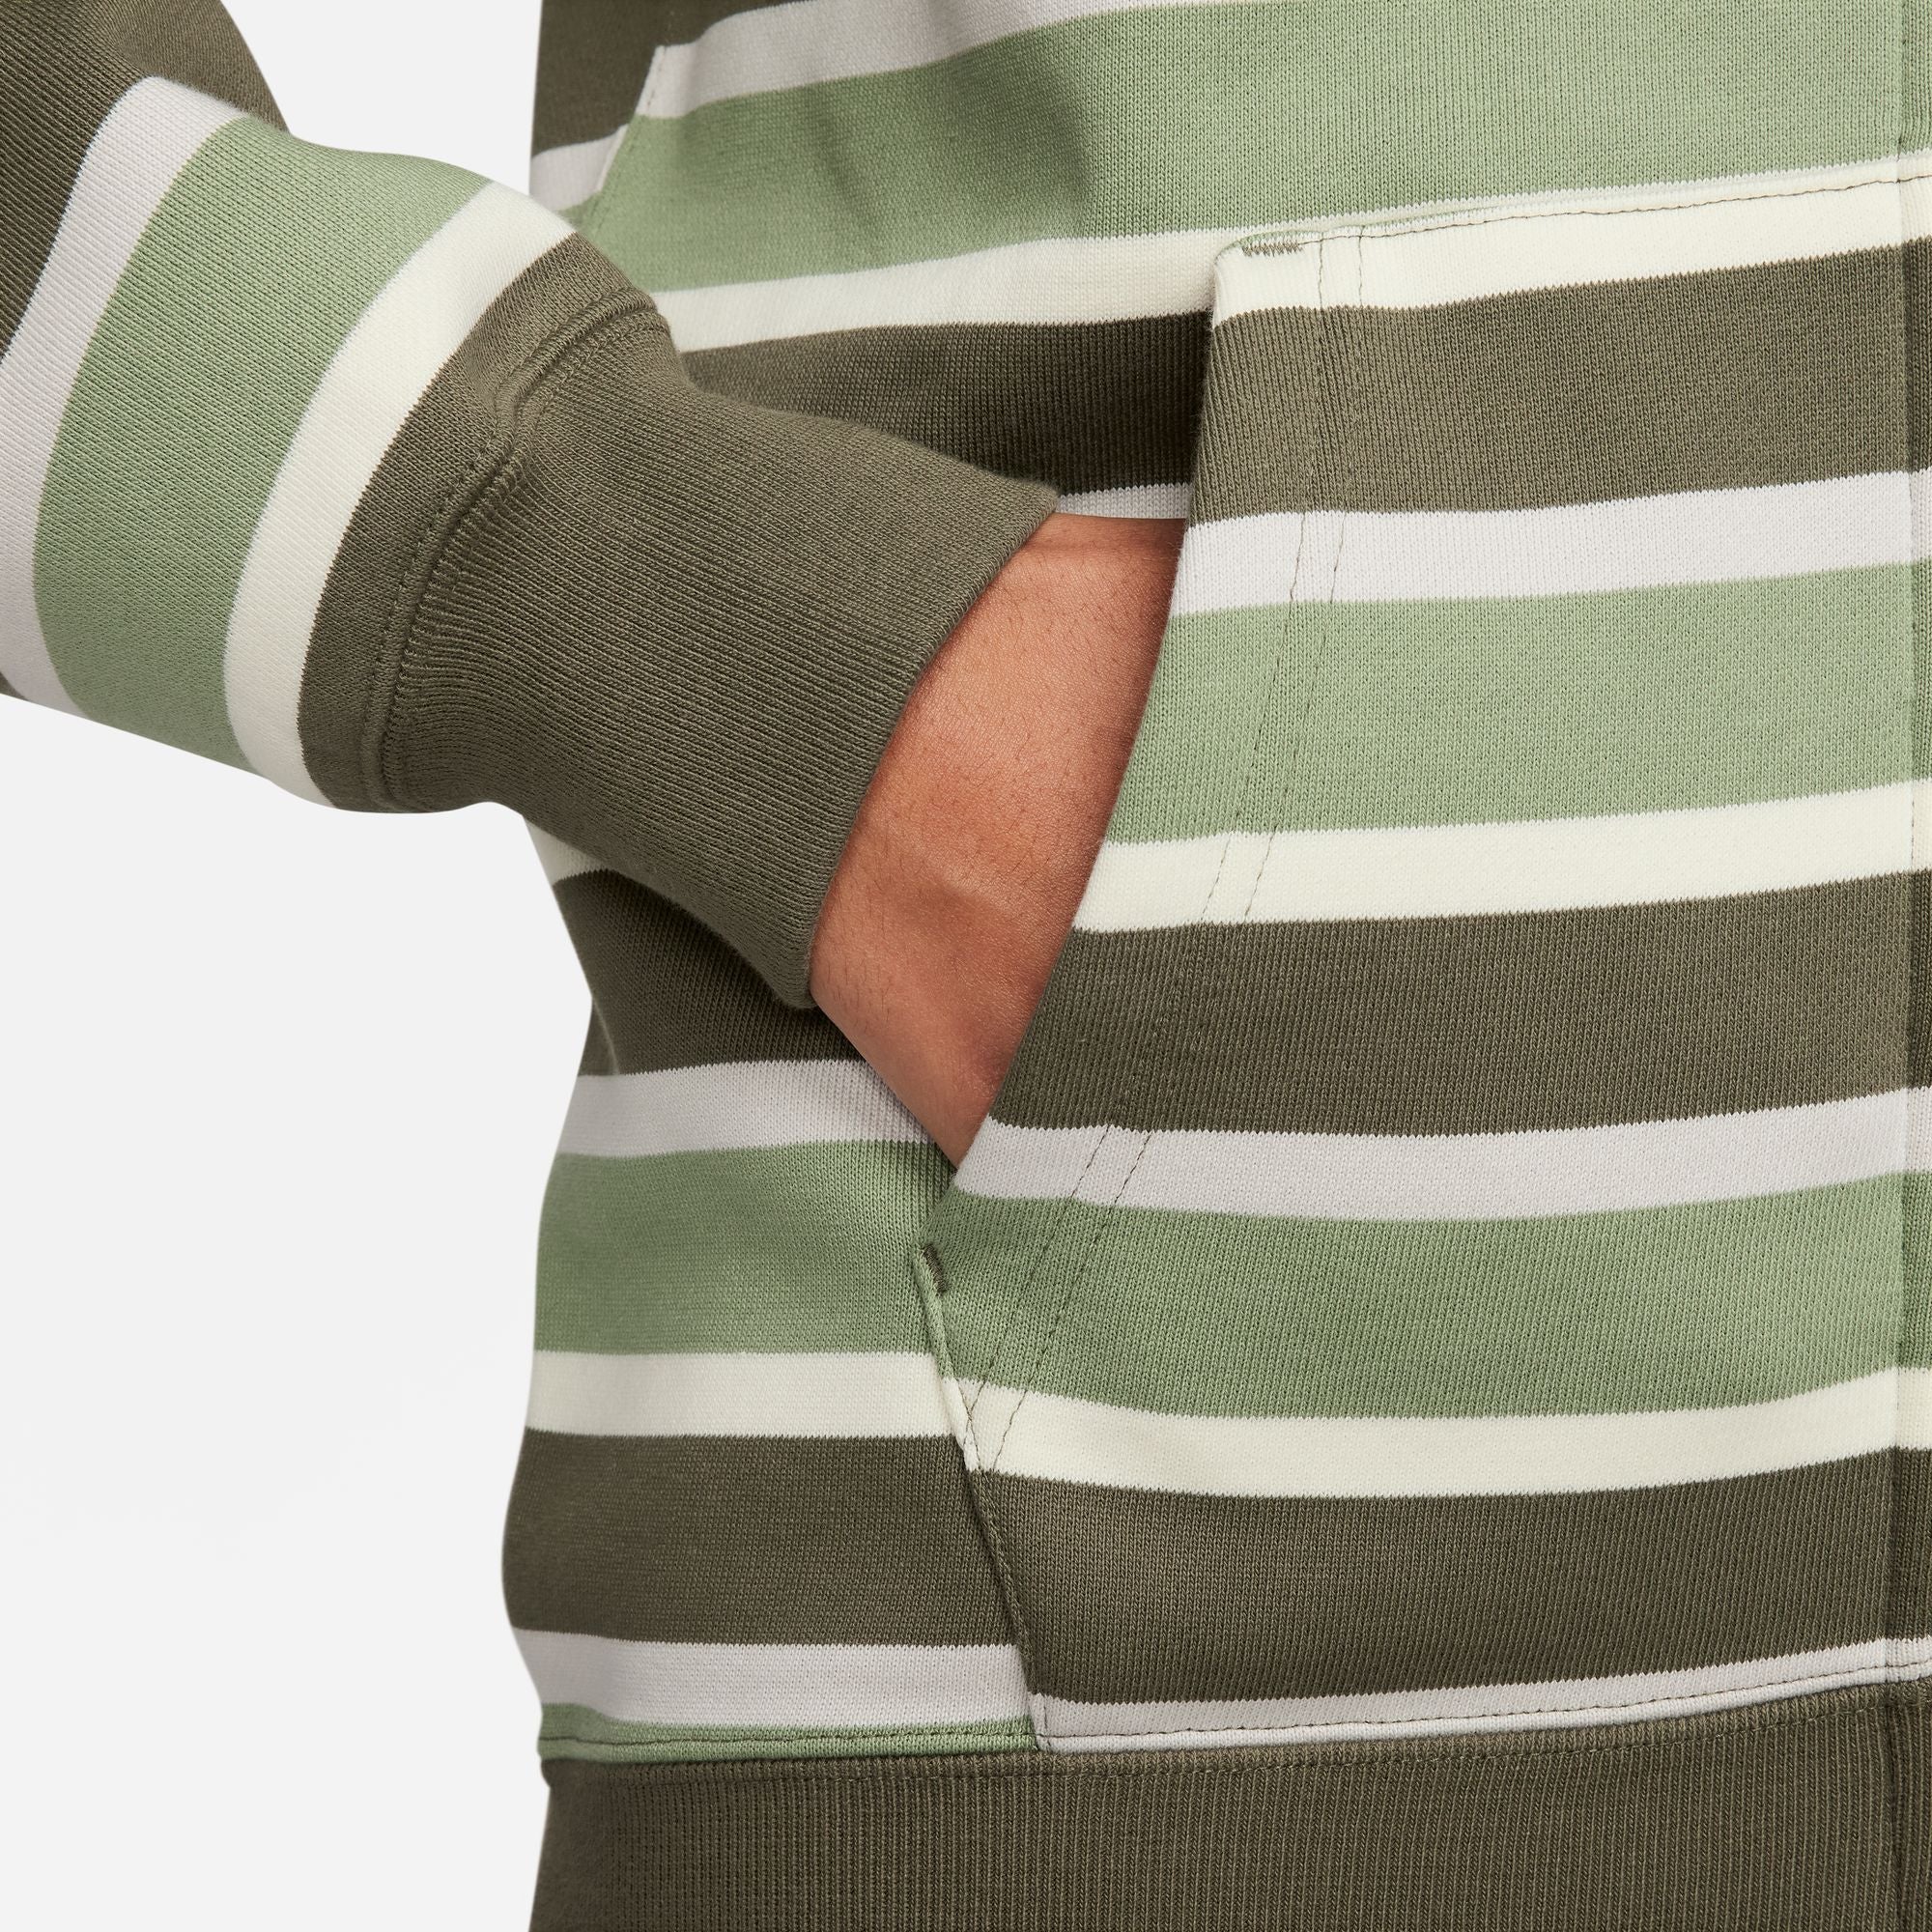 Nike SB Full Zip Striped Hooded Sweatshirt - Coconut Milk/Oil Green-White